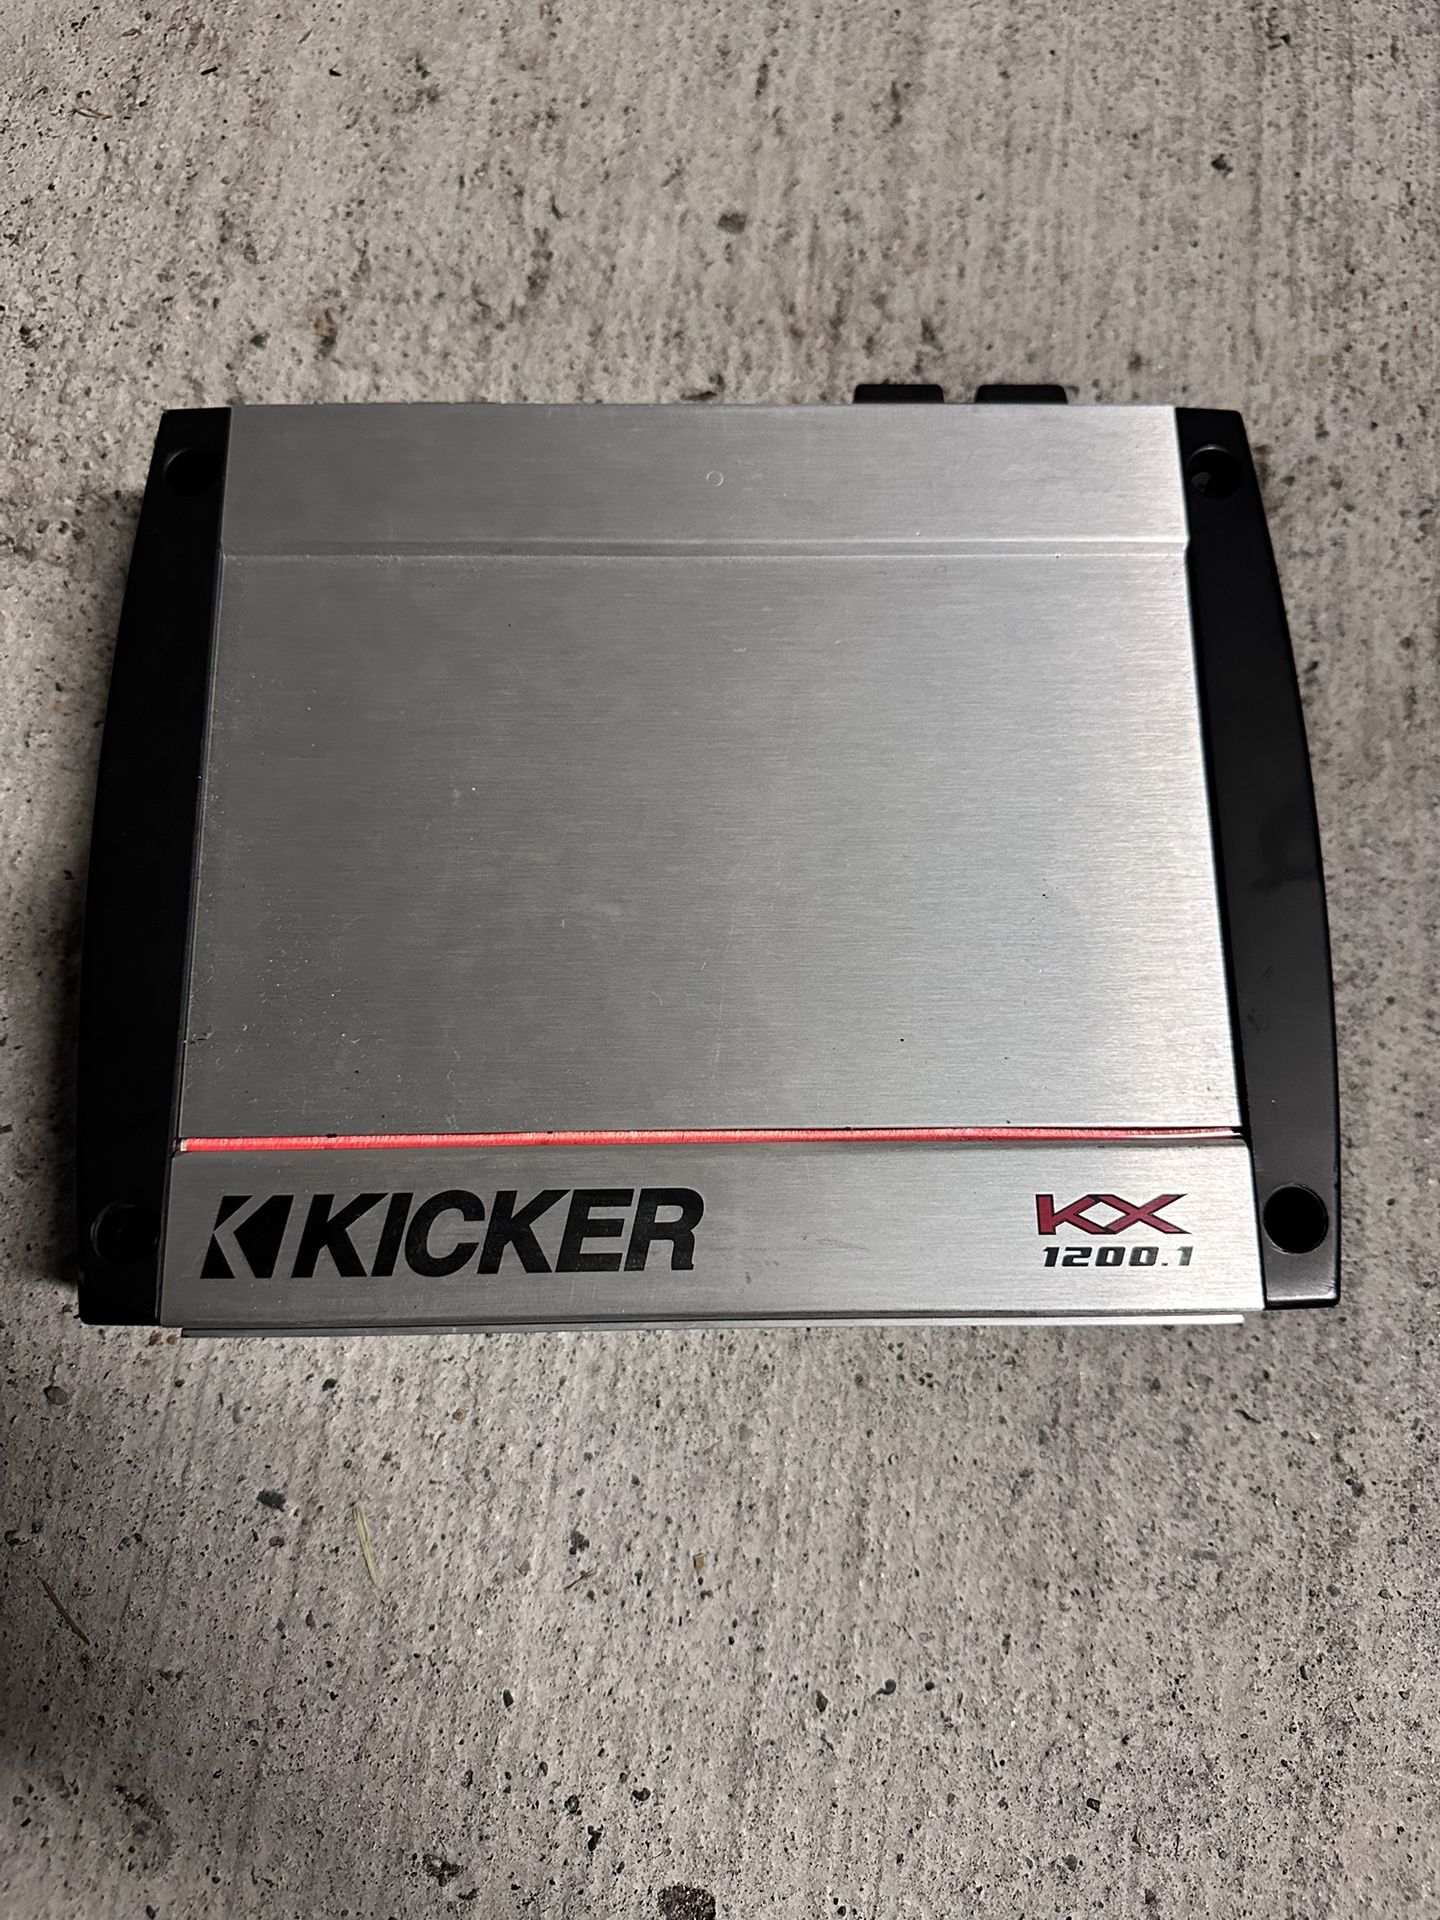 Kicker 1200W Amp